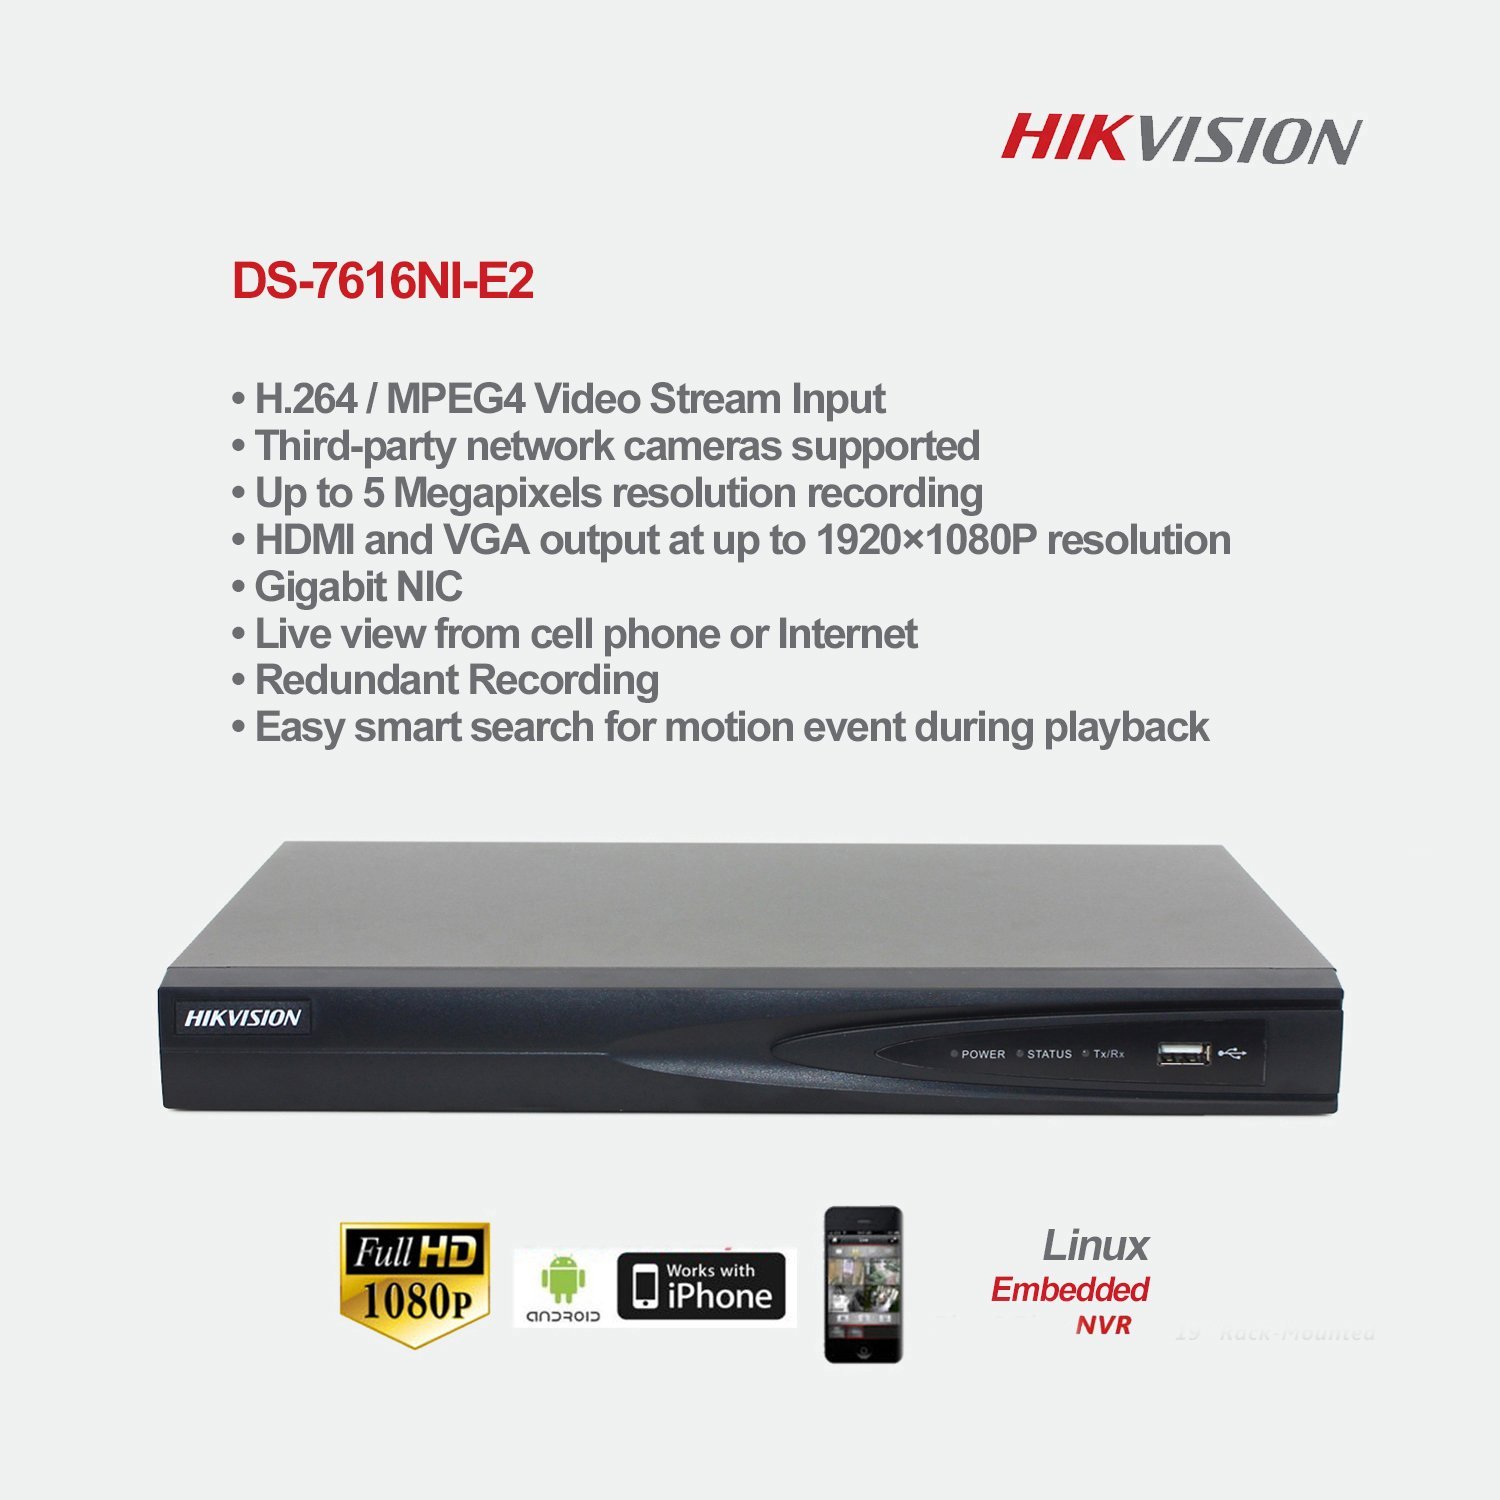 HIKVISION DS-7616NI-E2 NVR Network Video Recorder